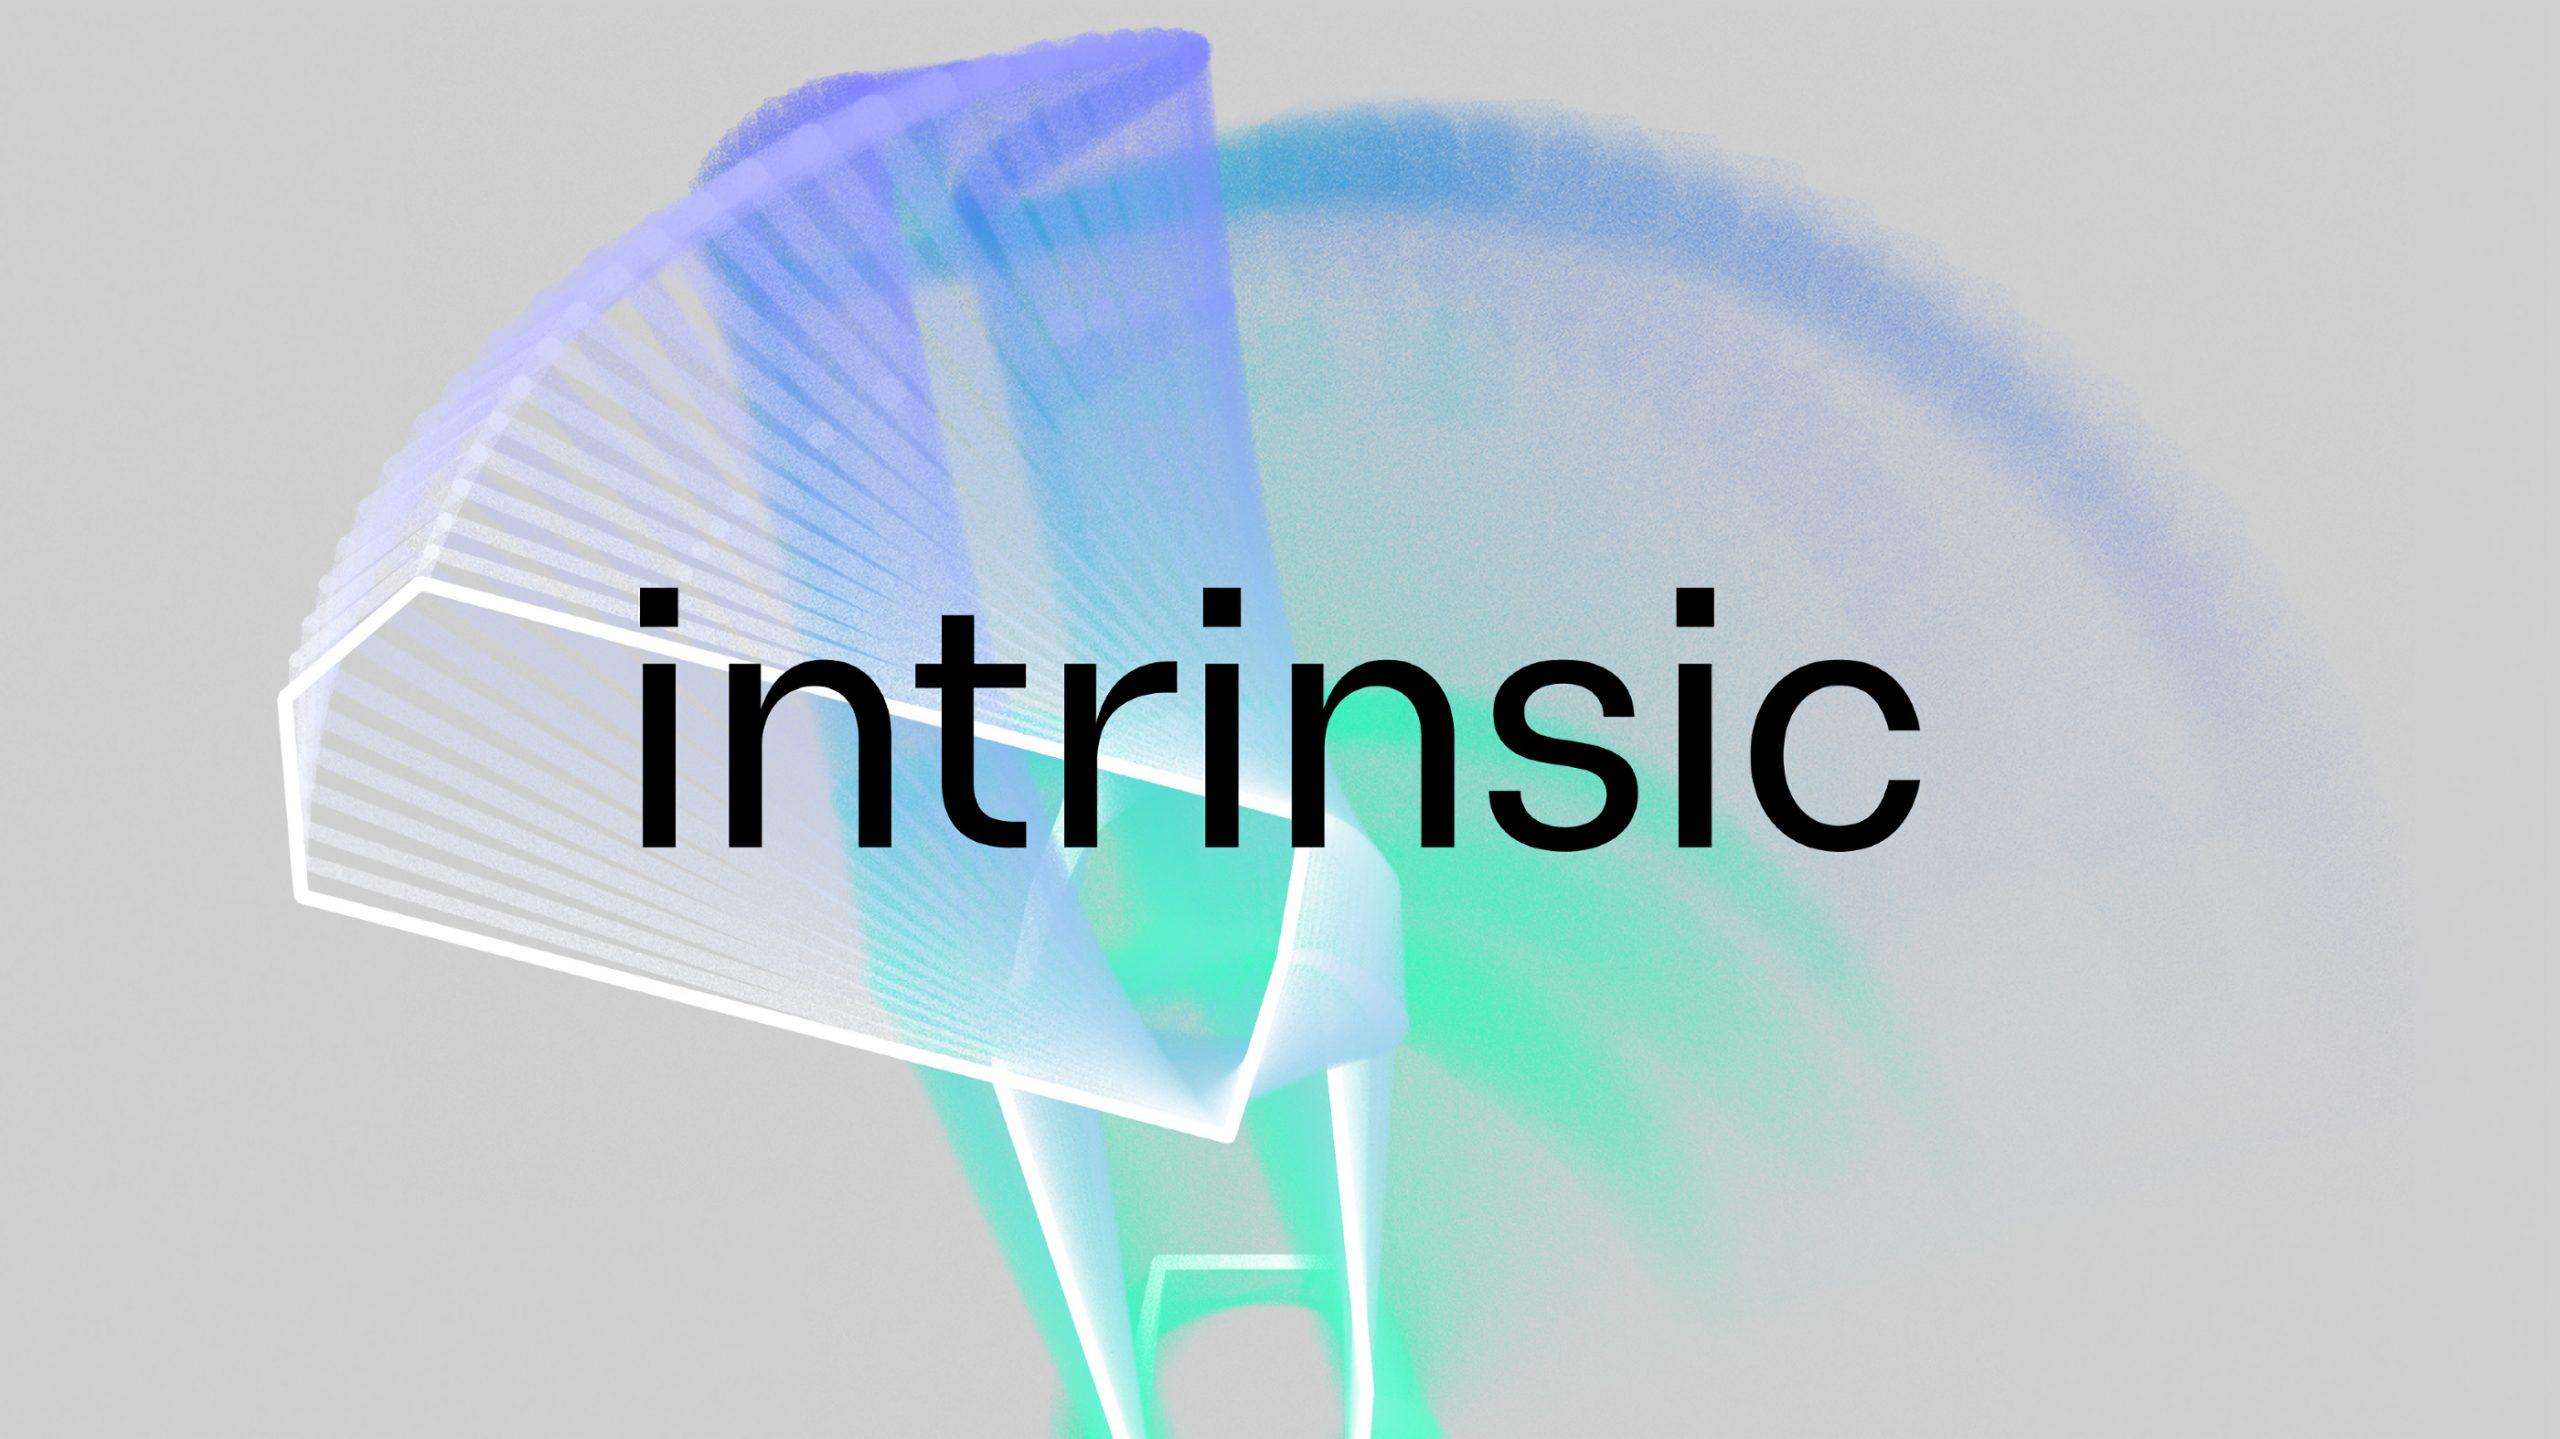 Alphabet to launch a new Robotics Company called Intrinsic_30.1